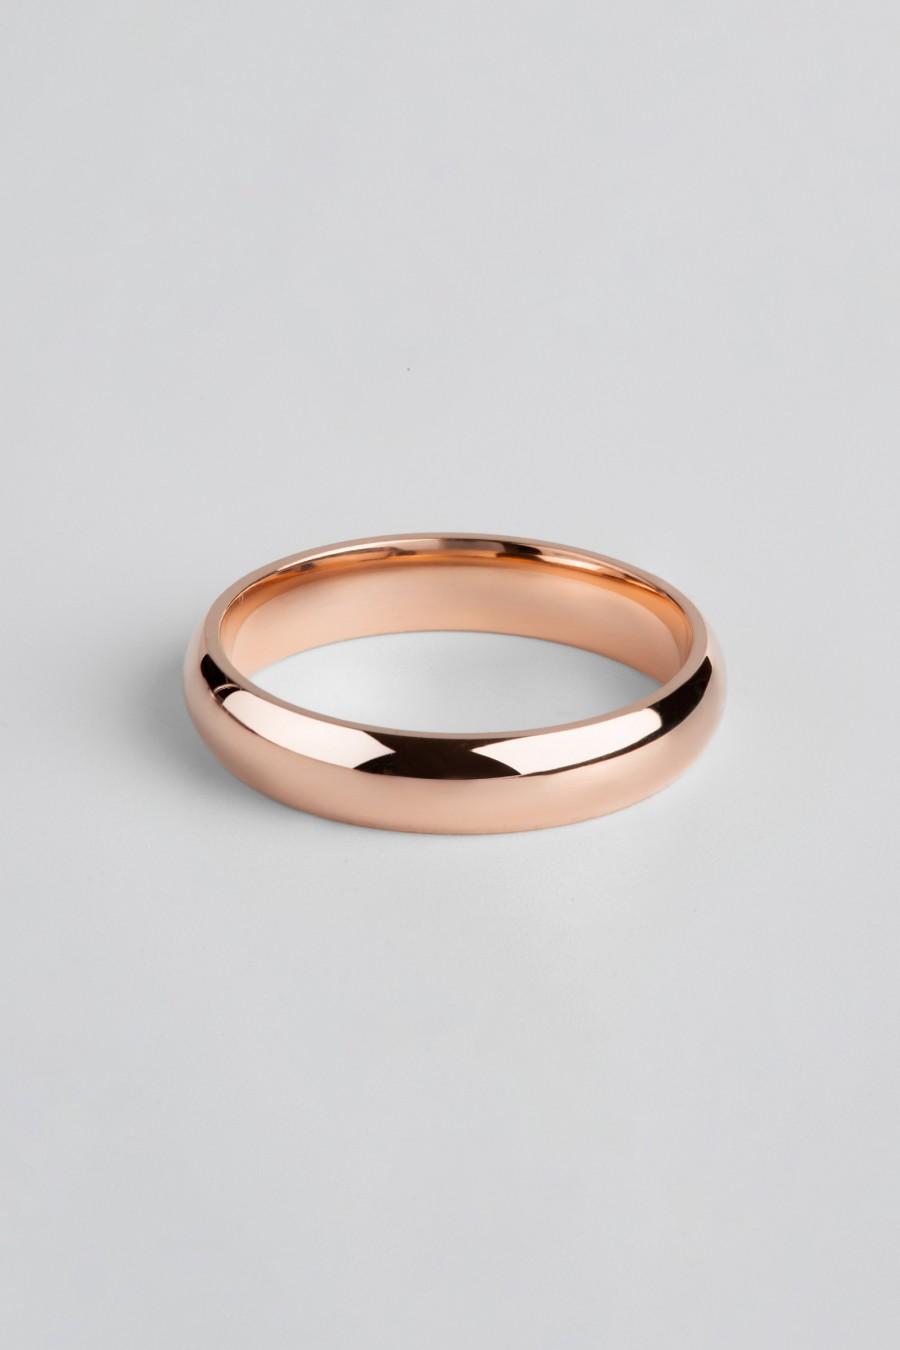 زفاف - 14k Rose Gold Band - CLASSIC DOME / Polished / Comfort Fit / Men's Women's Wedding Ring / Simple Wedding Ring